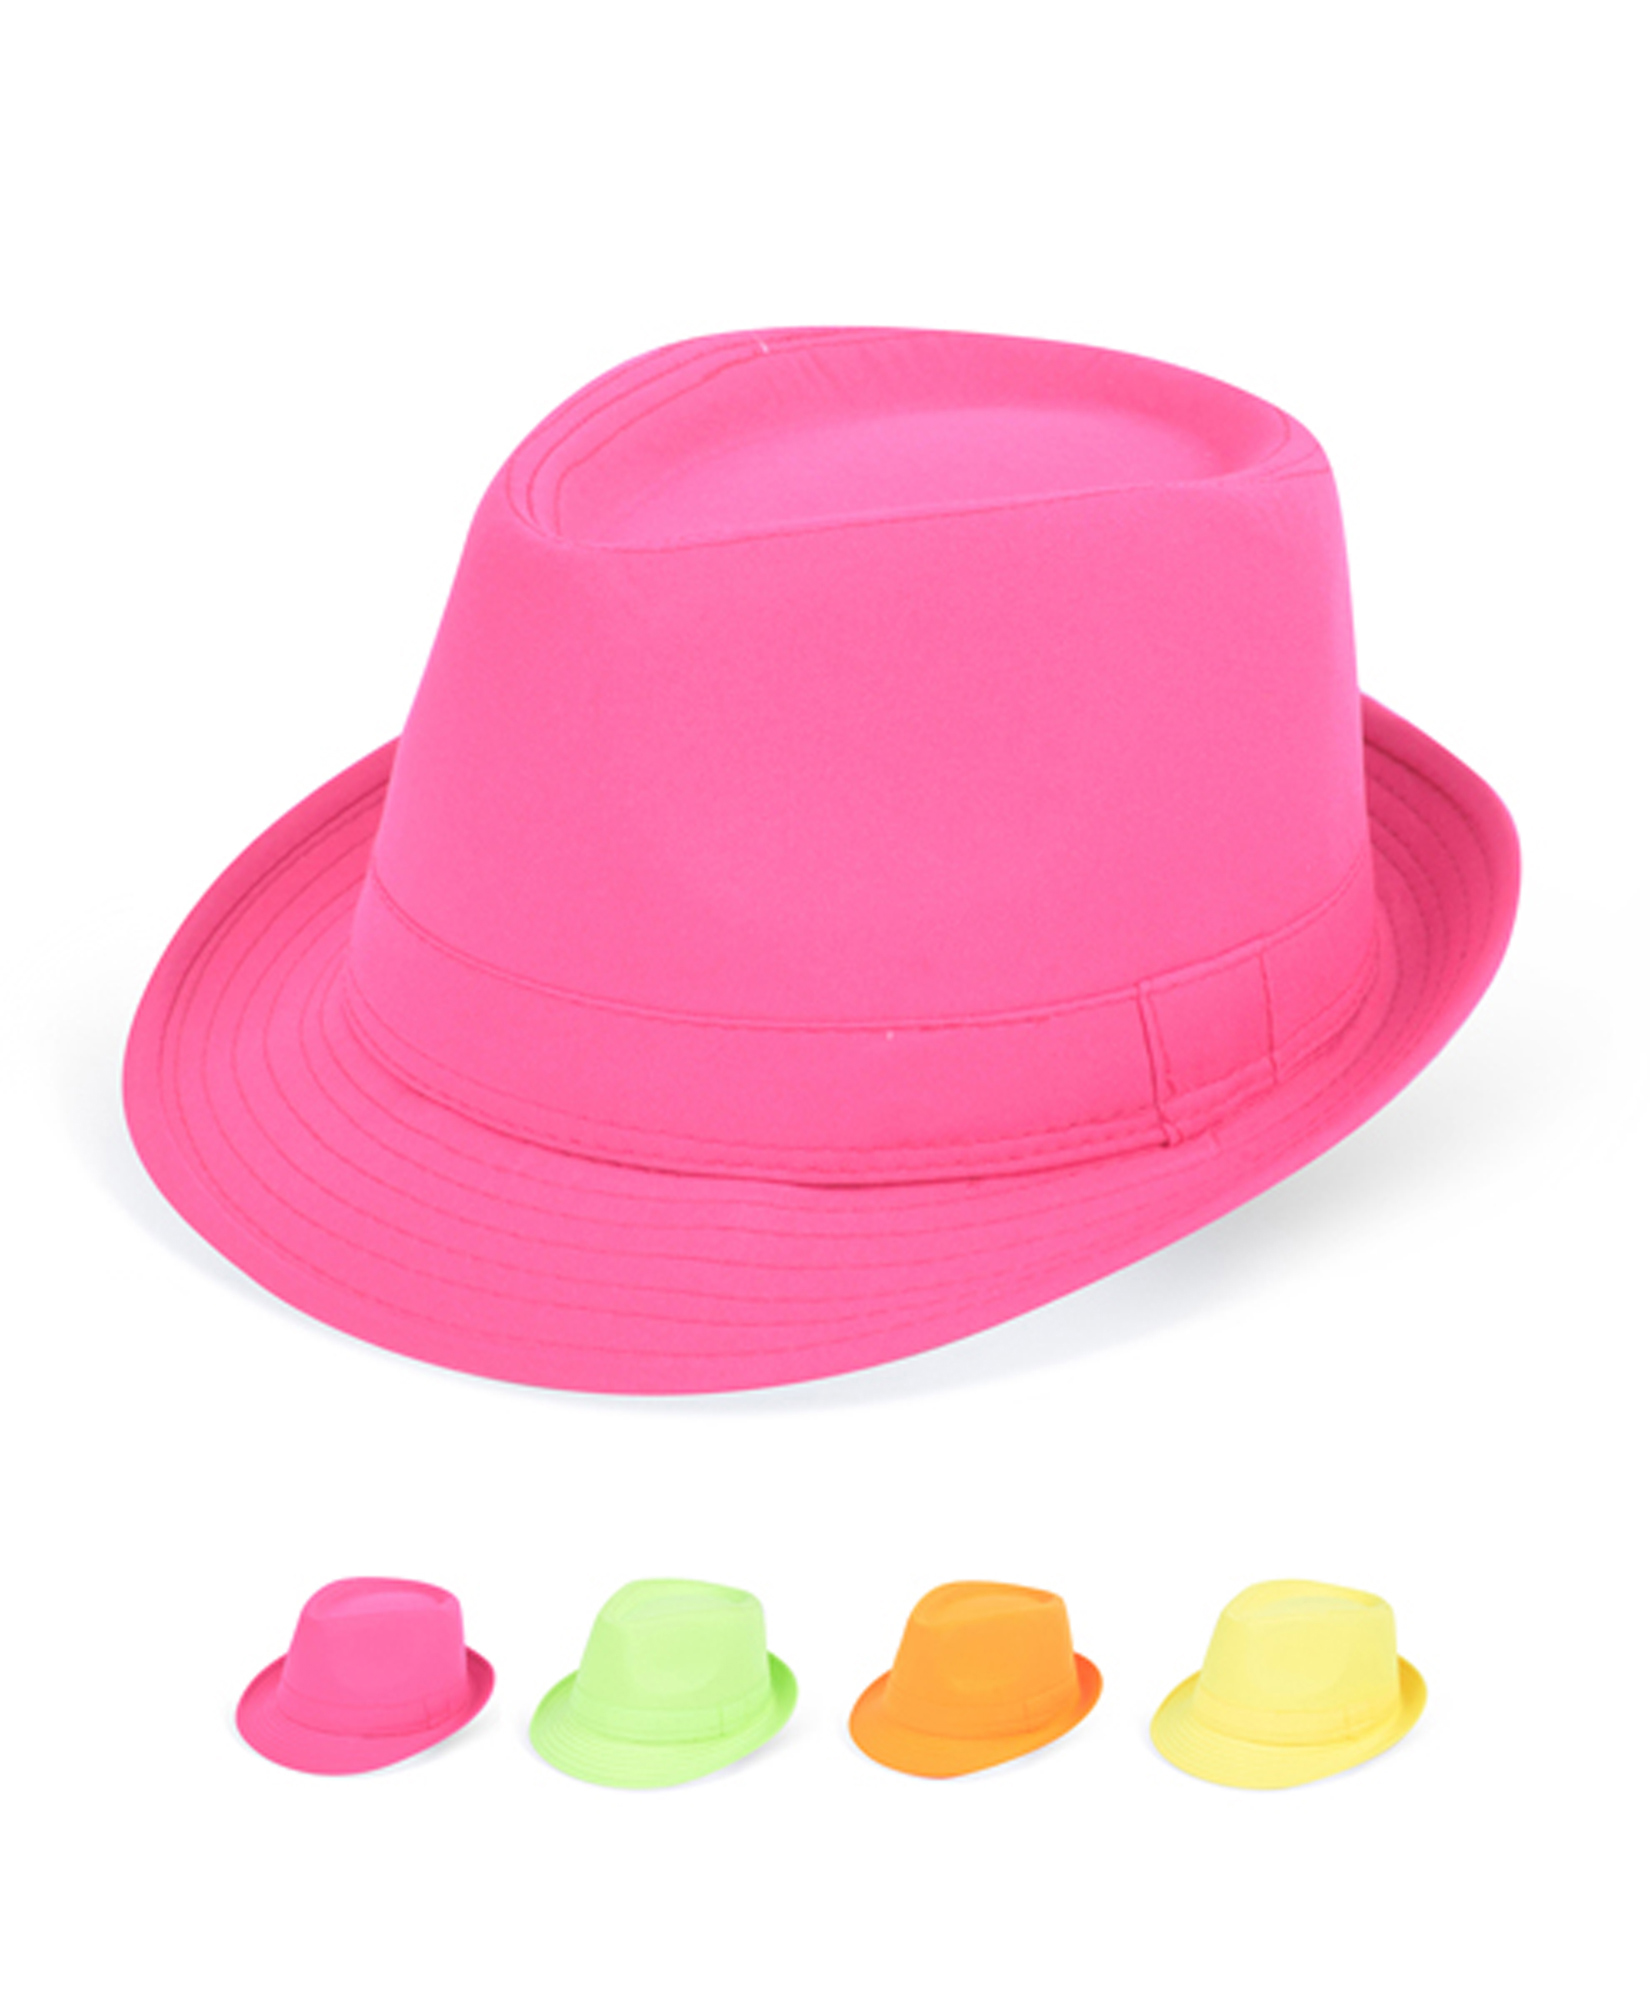 Nollia Solid Color Ladies Pastel Colored Fedora Hats